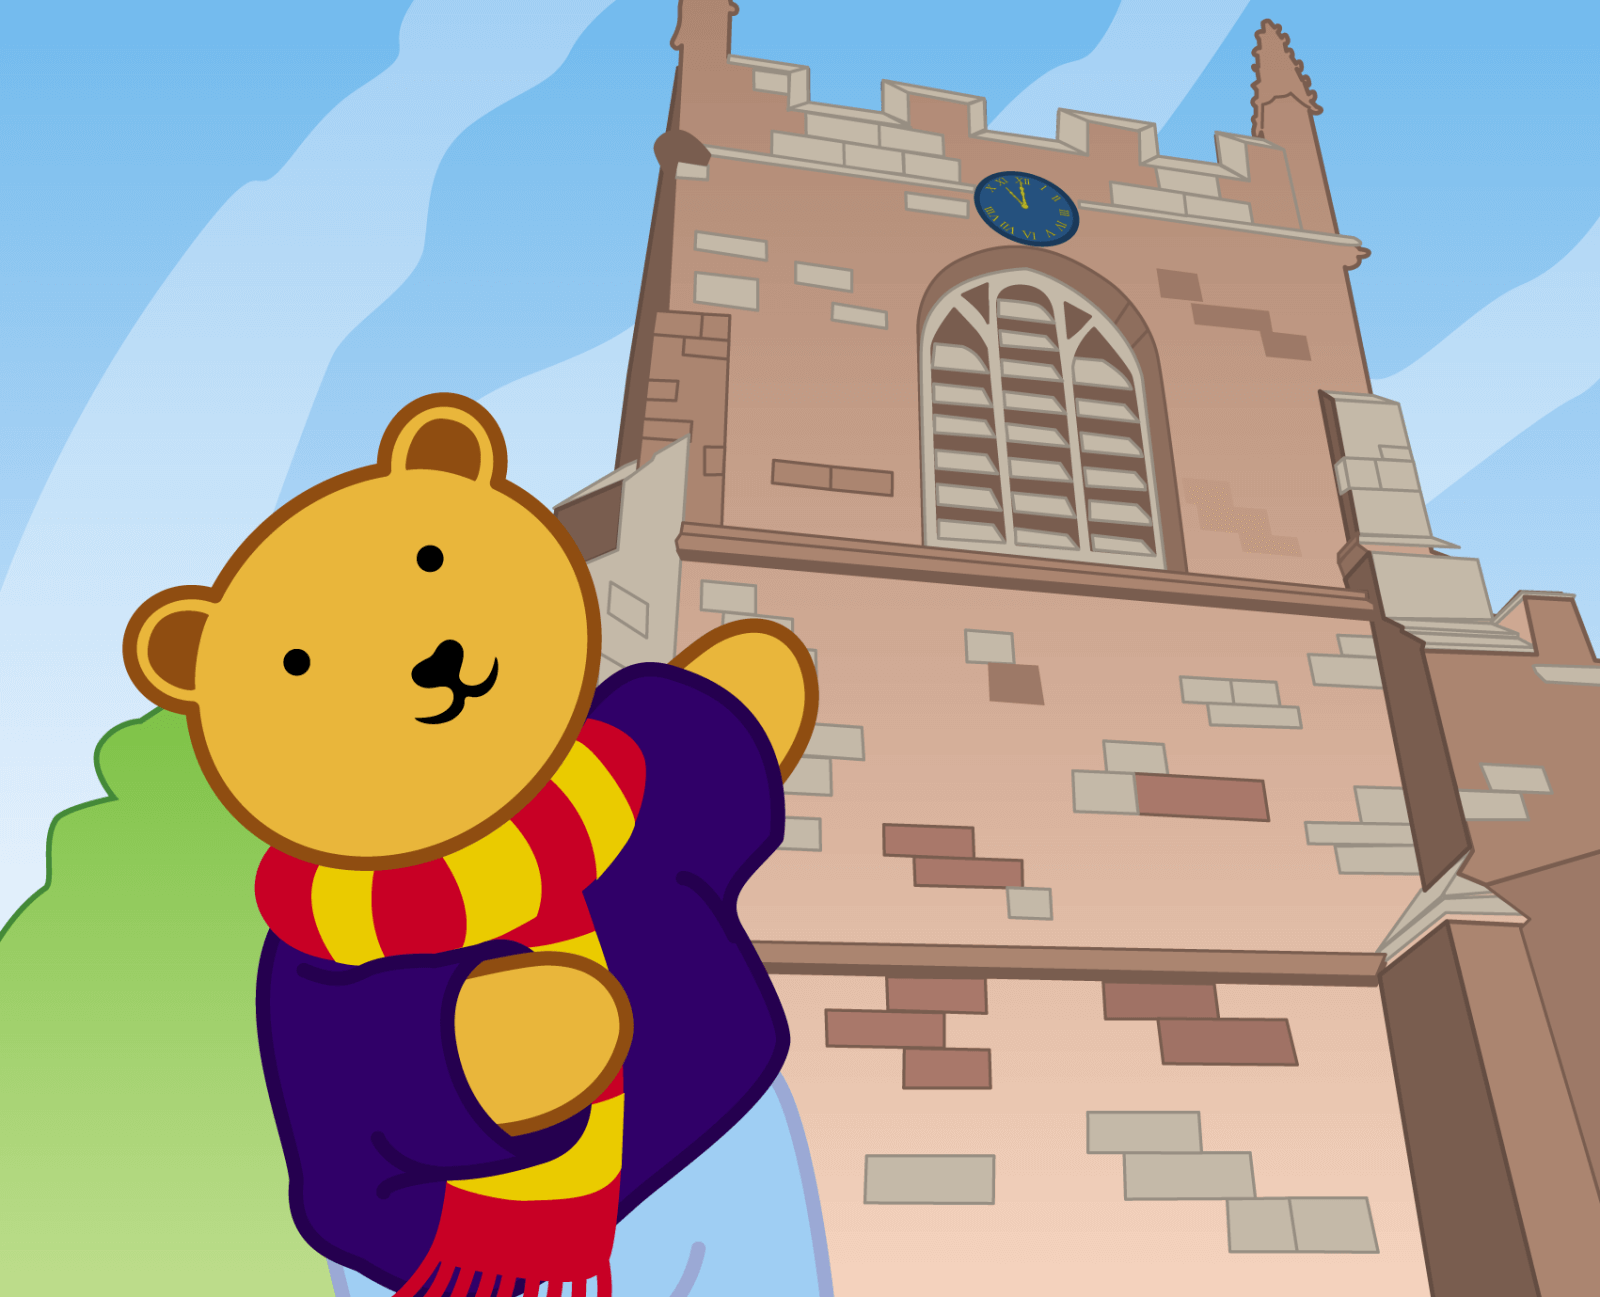 Teddy at Bangor Cathedral - 10